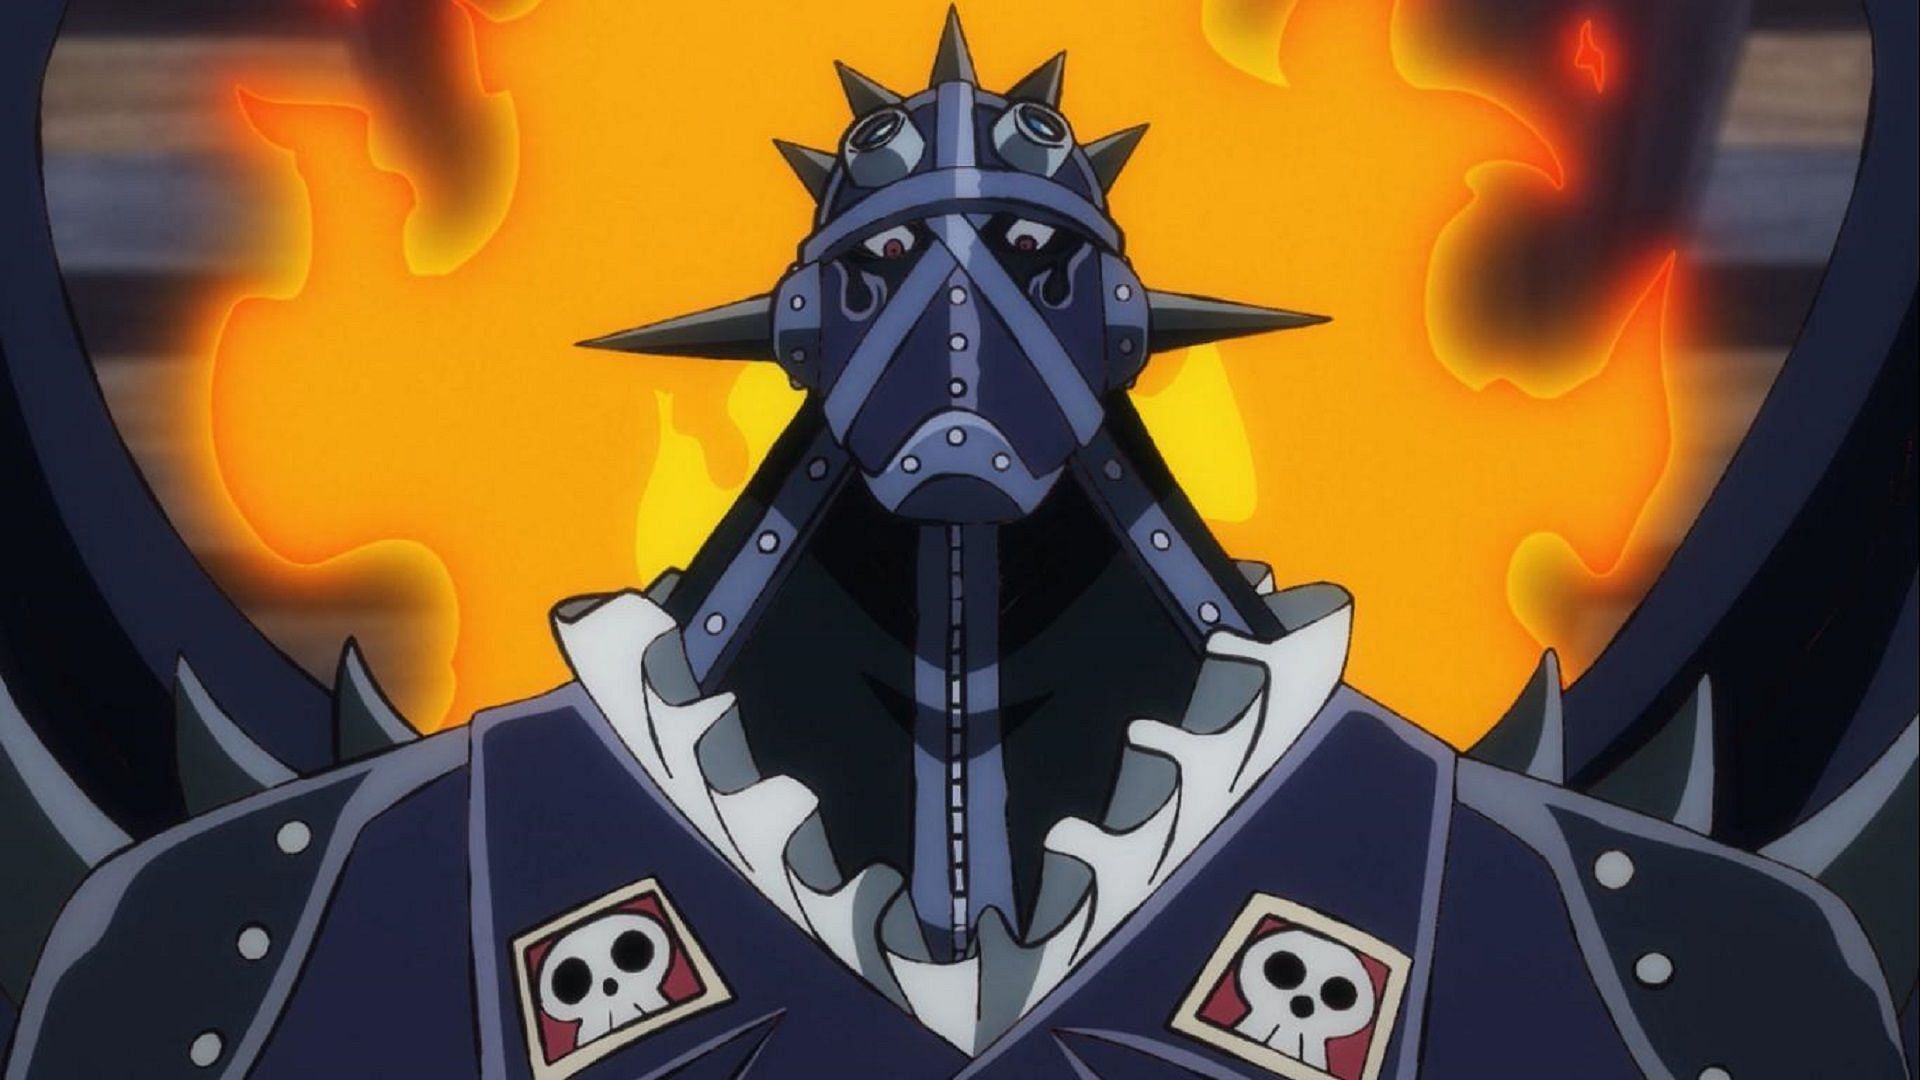 King (Image via Toei Animation, One Piece)